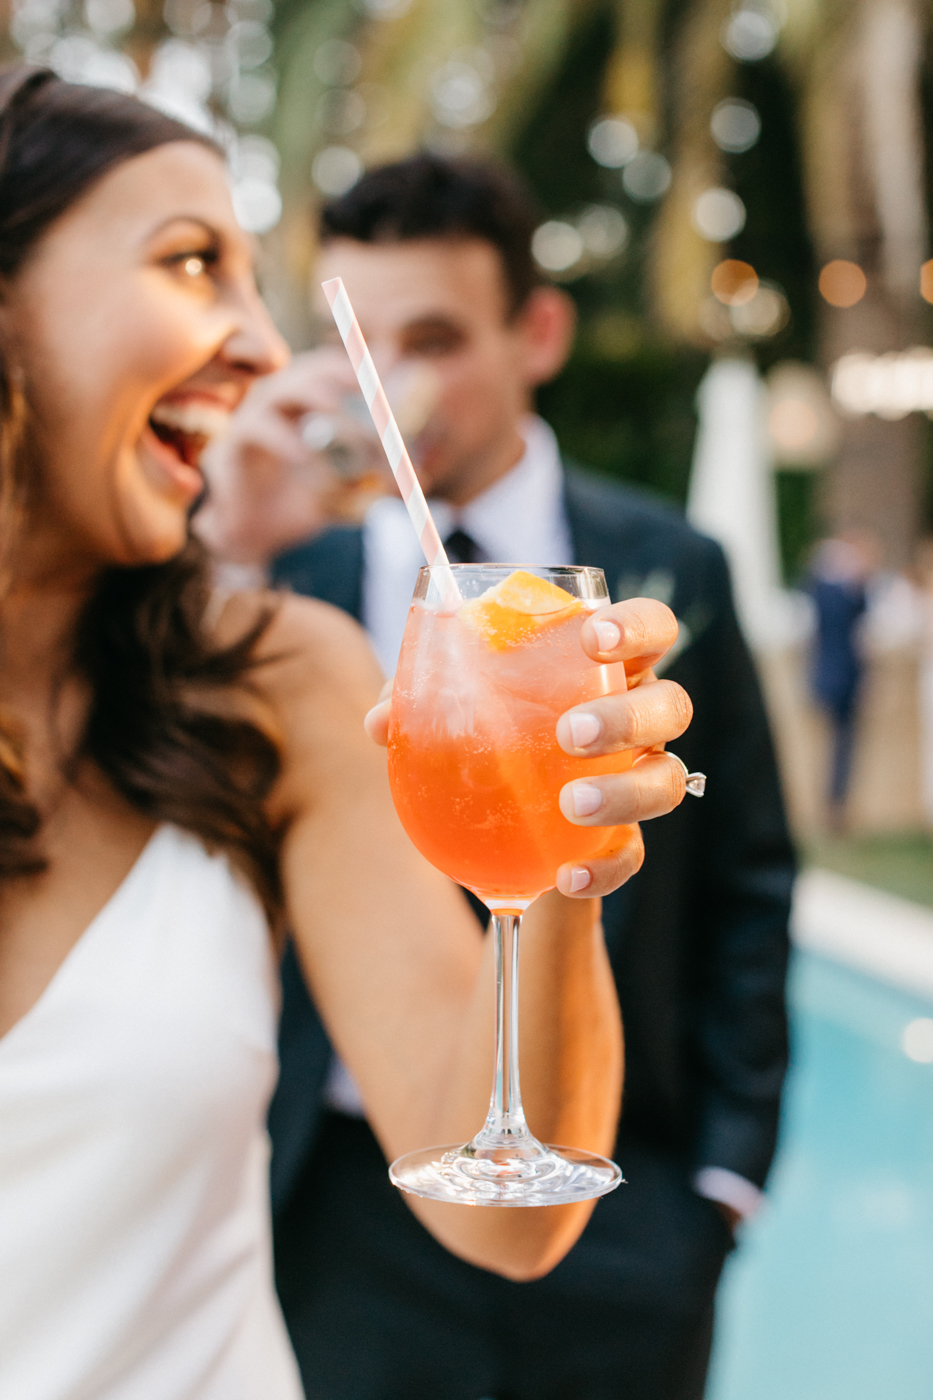 aperol spritz as a custom cocktail at wedding celebration.